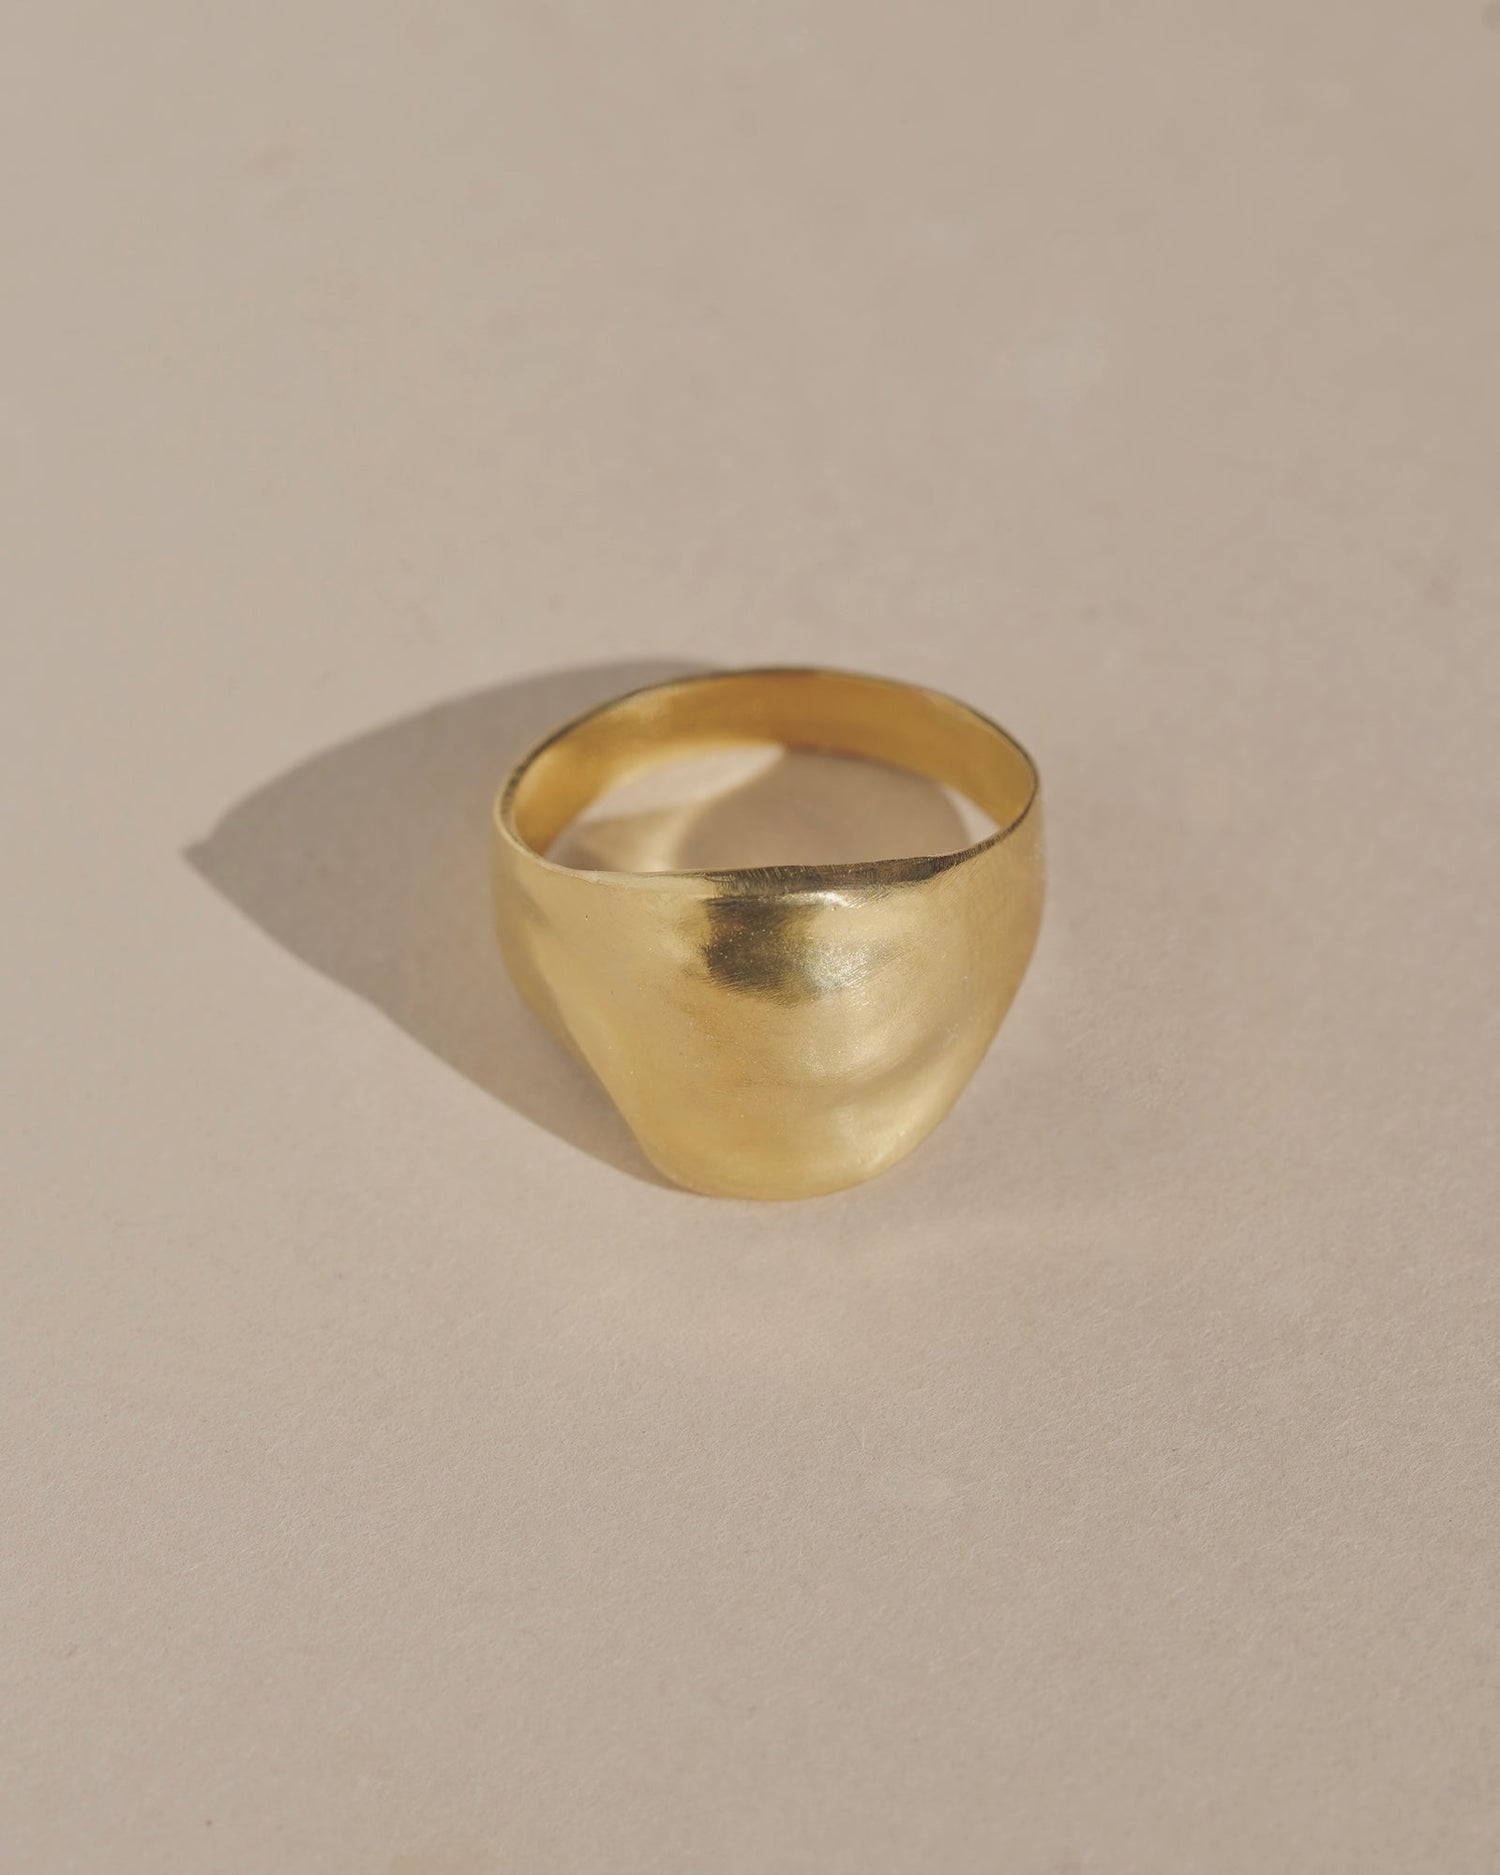 Gold signet ring handmade in Santa Cruz